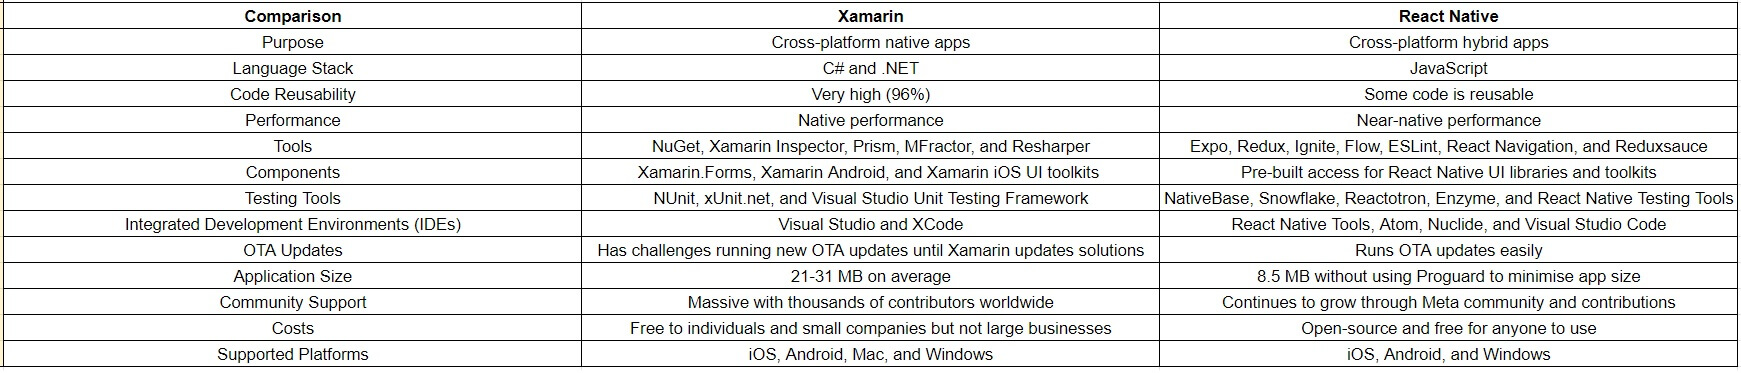 React Native vs. Xamarin Key Differences